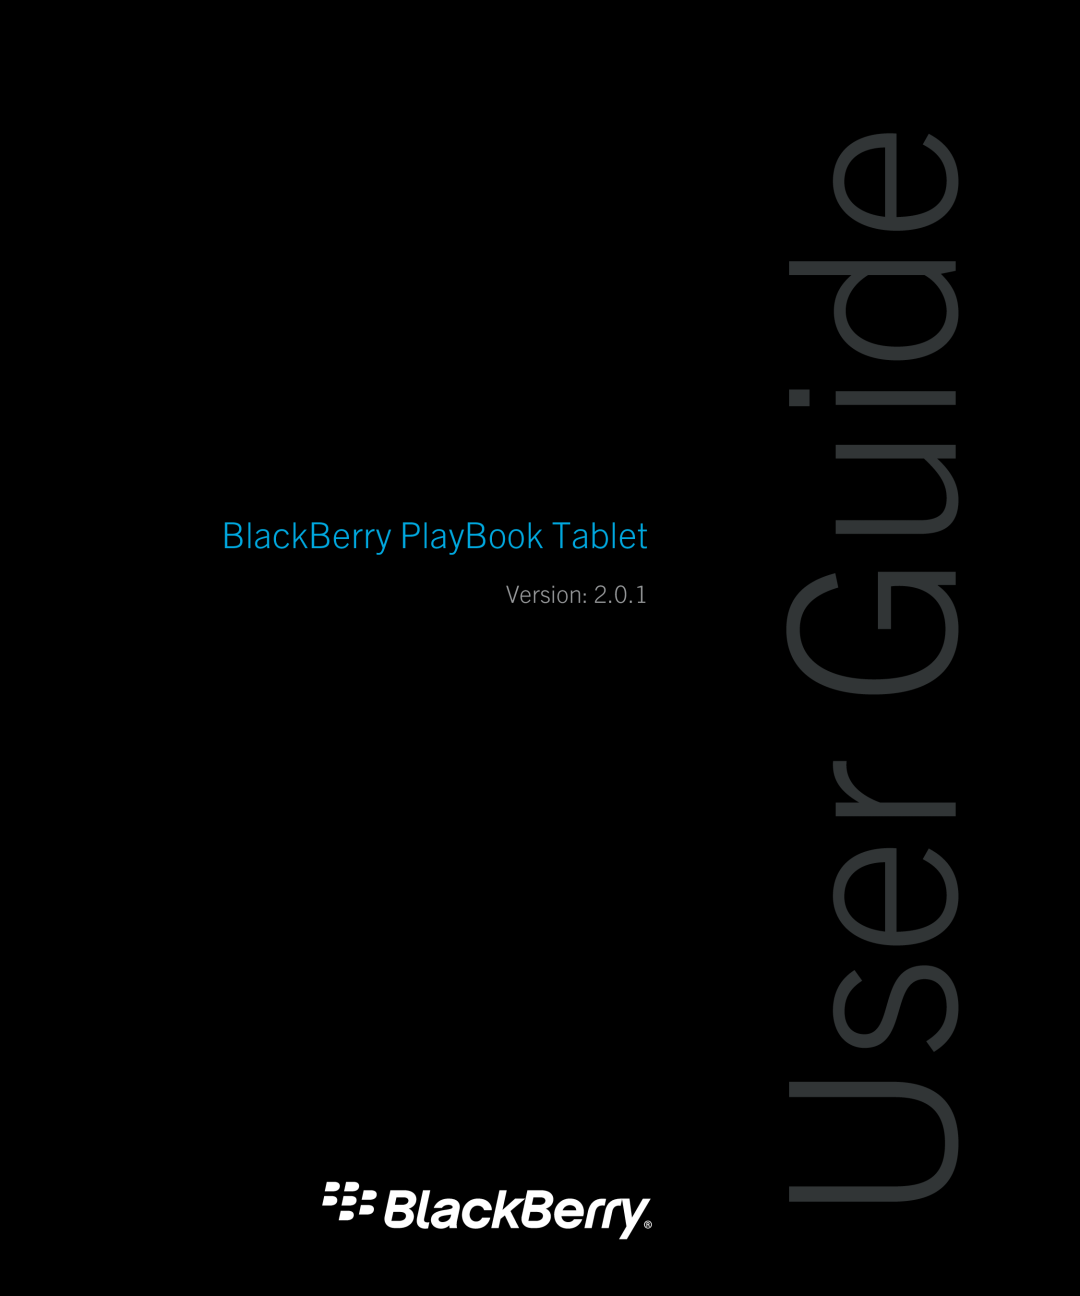 Blackberry 2.0.1 manual User Guide, BlackBerry PlayBook Tablet, Version 